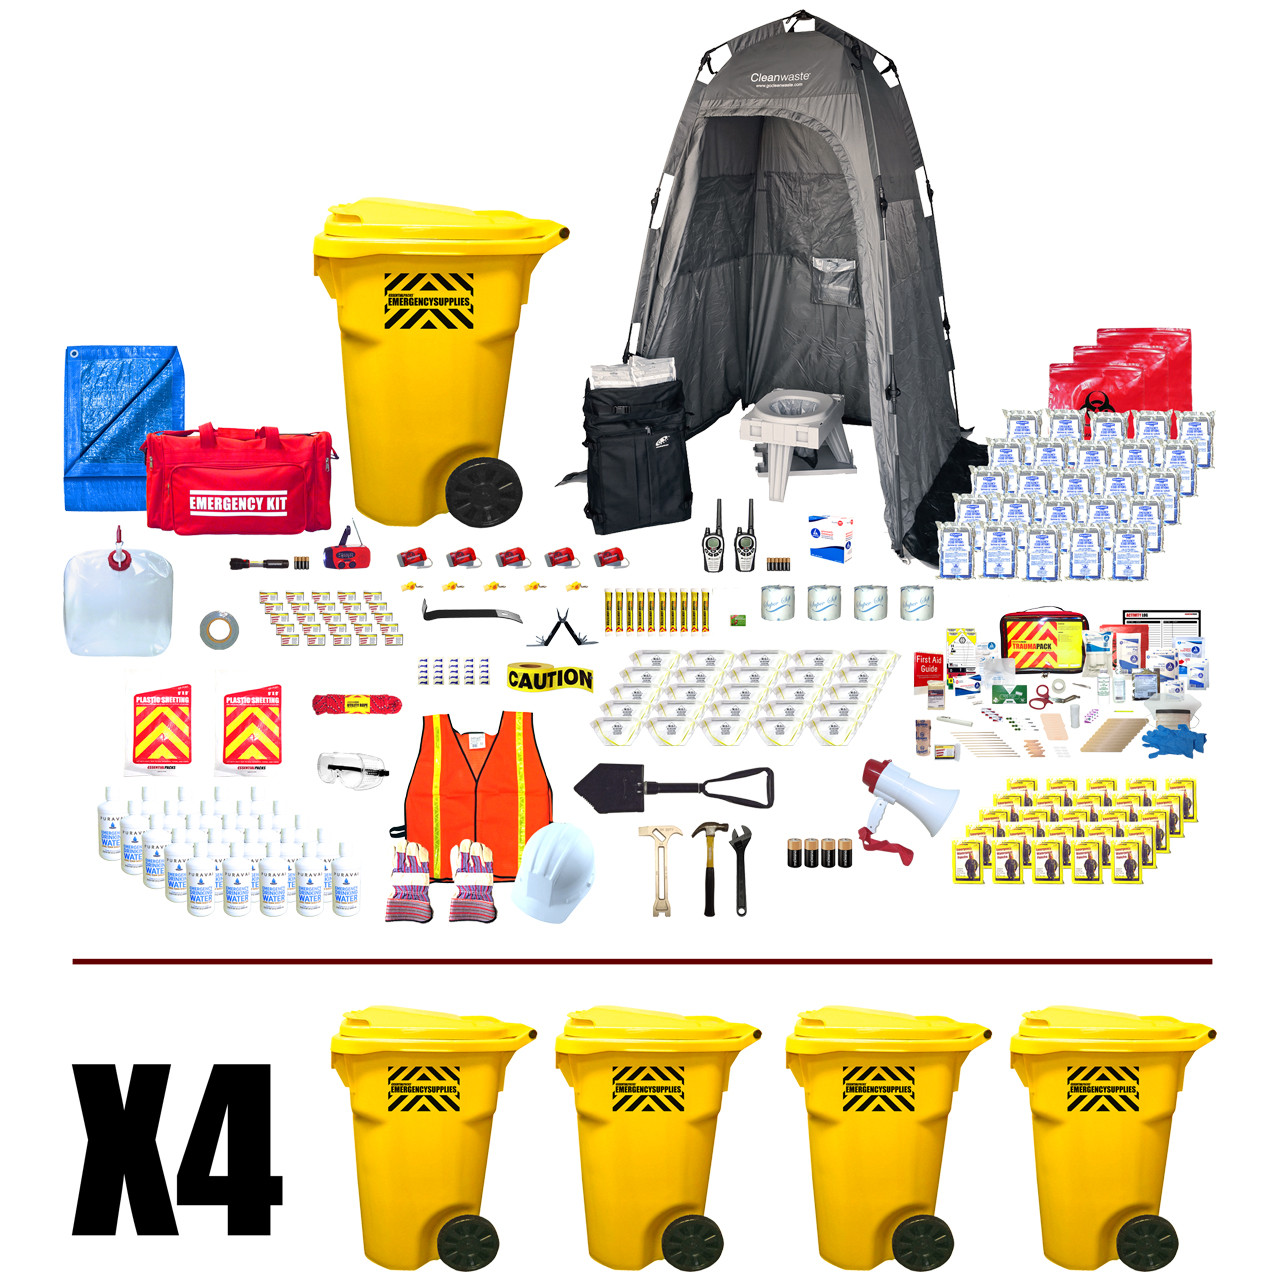 47 PIECES Survival Kit Supplies, First Aid Kit, Go Bag, Emergency  Preparedness Kit, Medical Kit